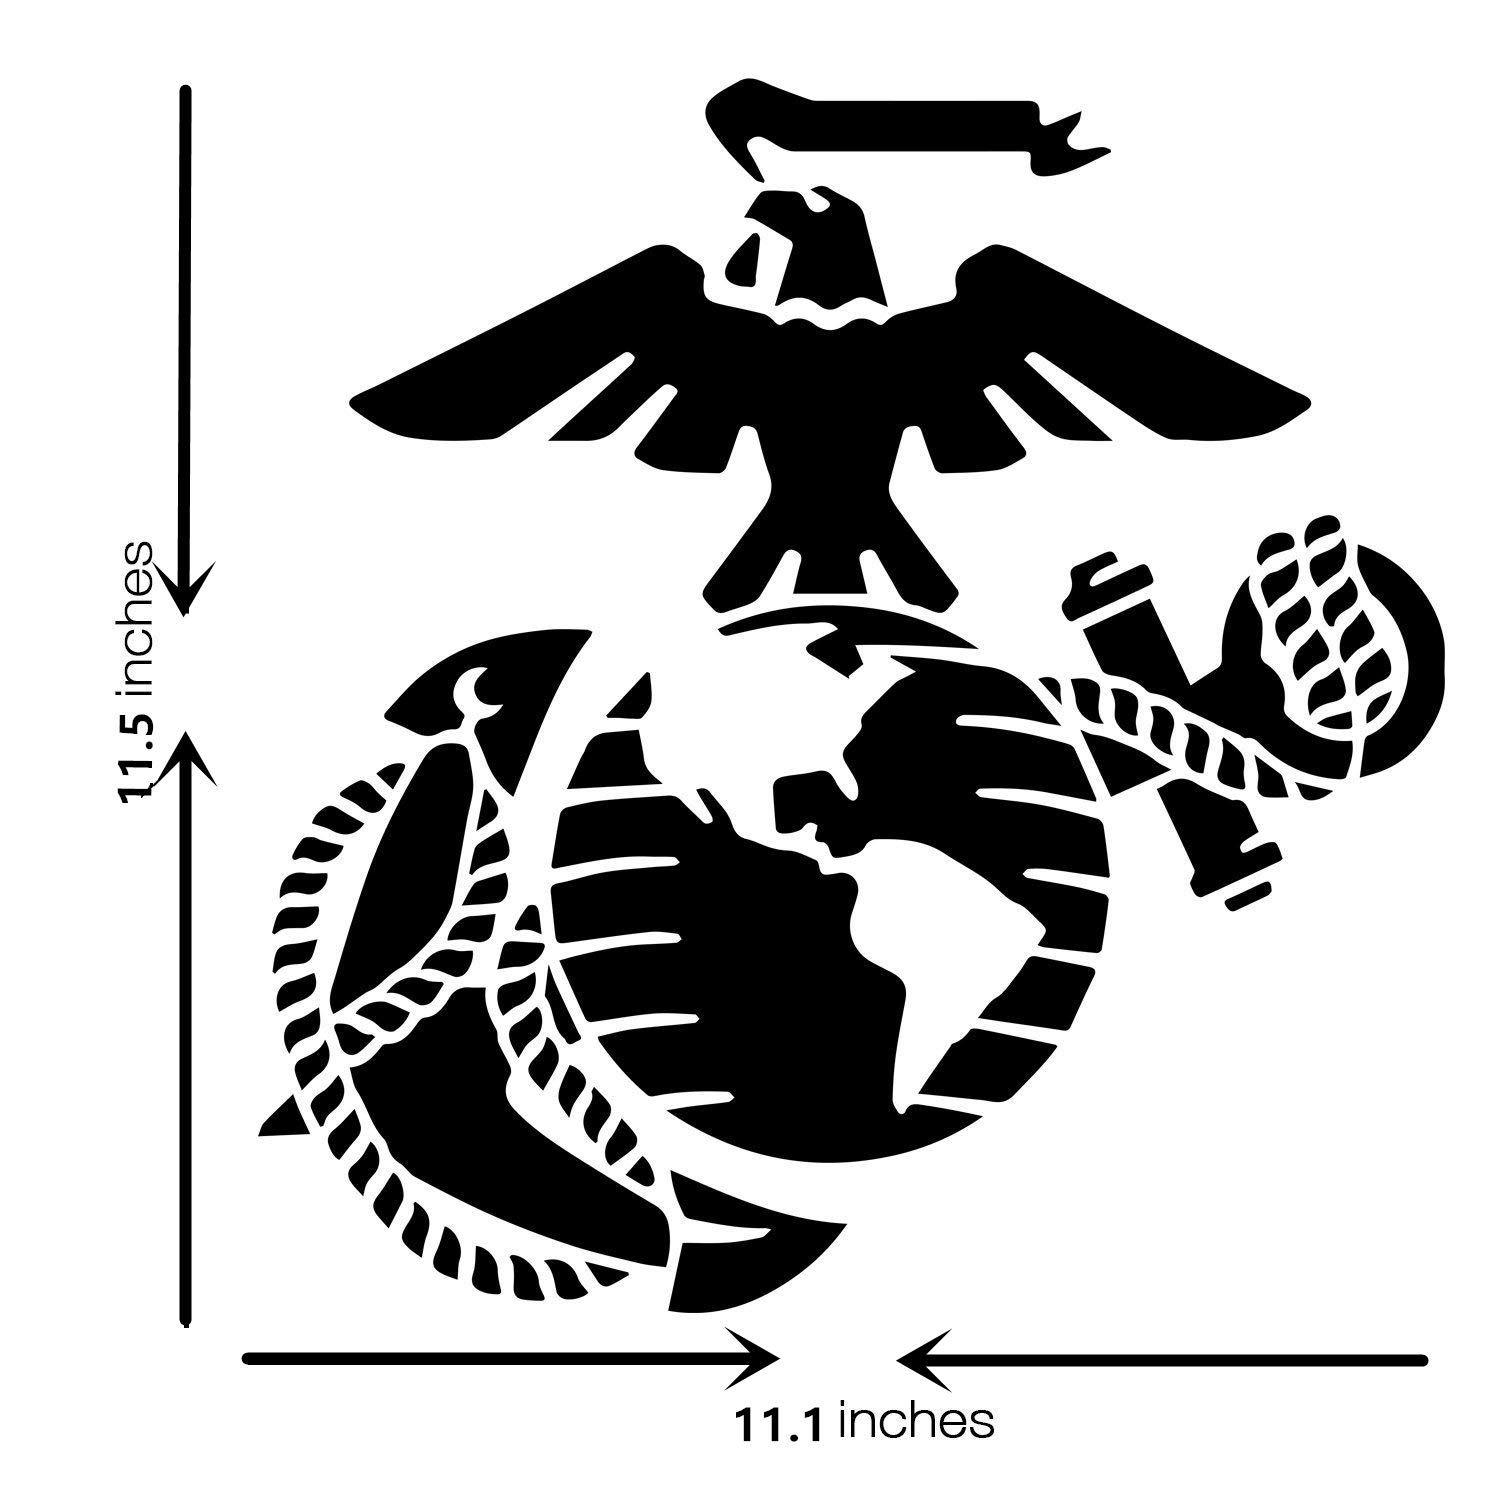 USMC Logo - Amazon.com: Large U.S Marine Corps Stencil for Painting on Wood ...